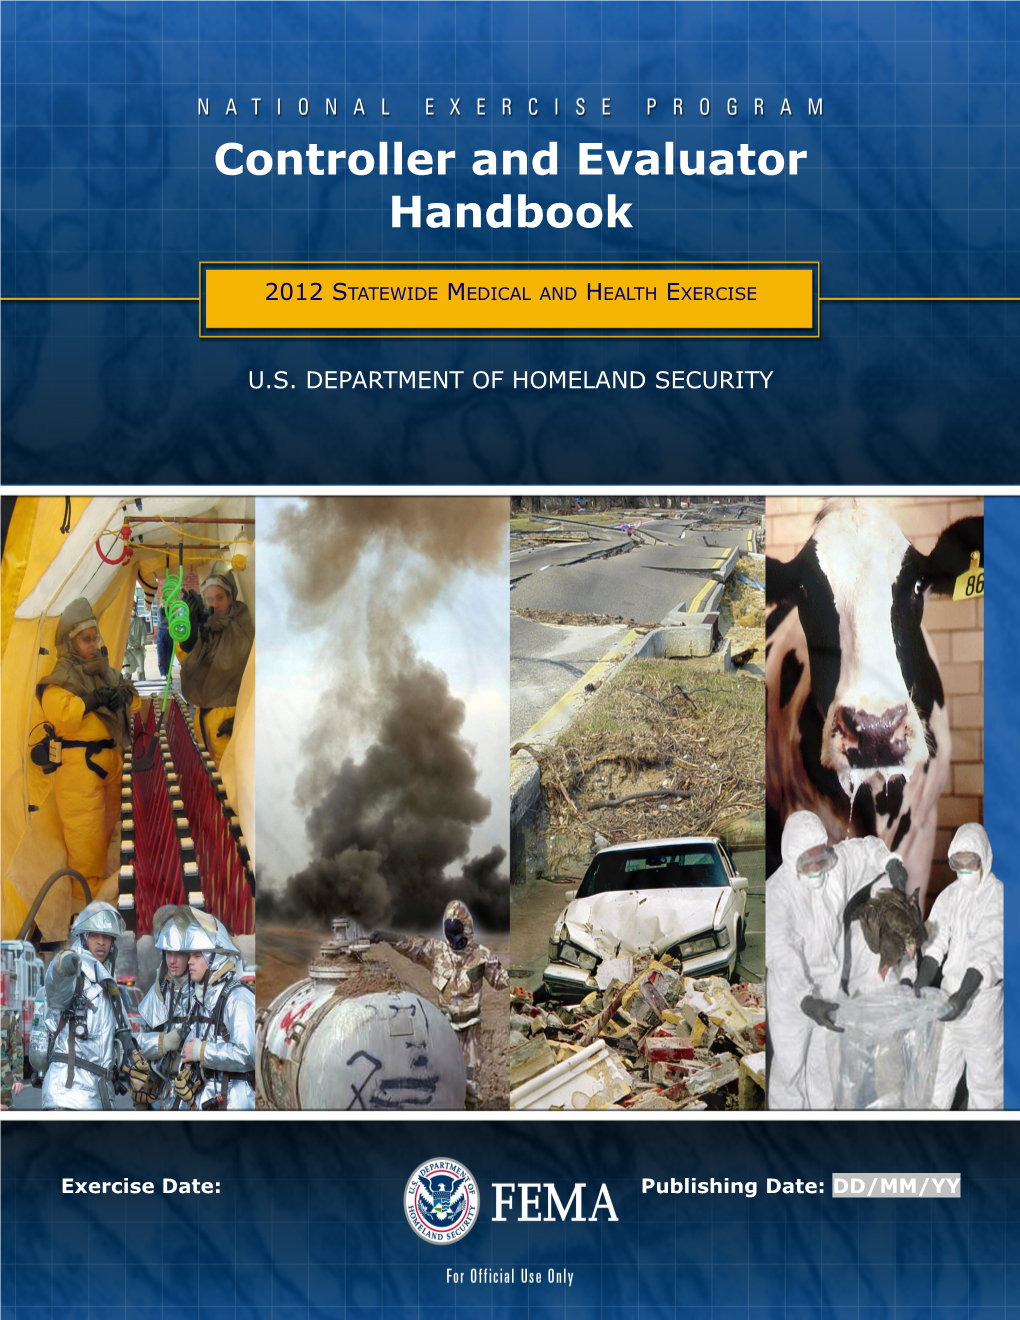 2011 Controller and Evaluator Handbook